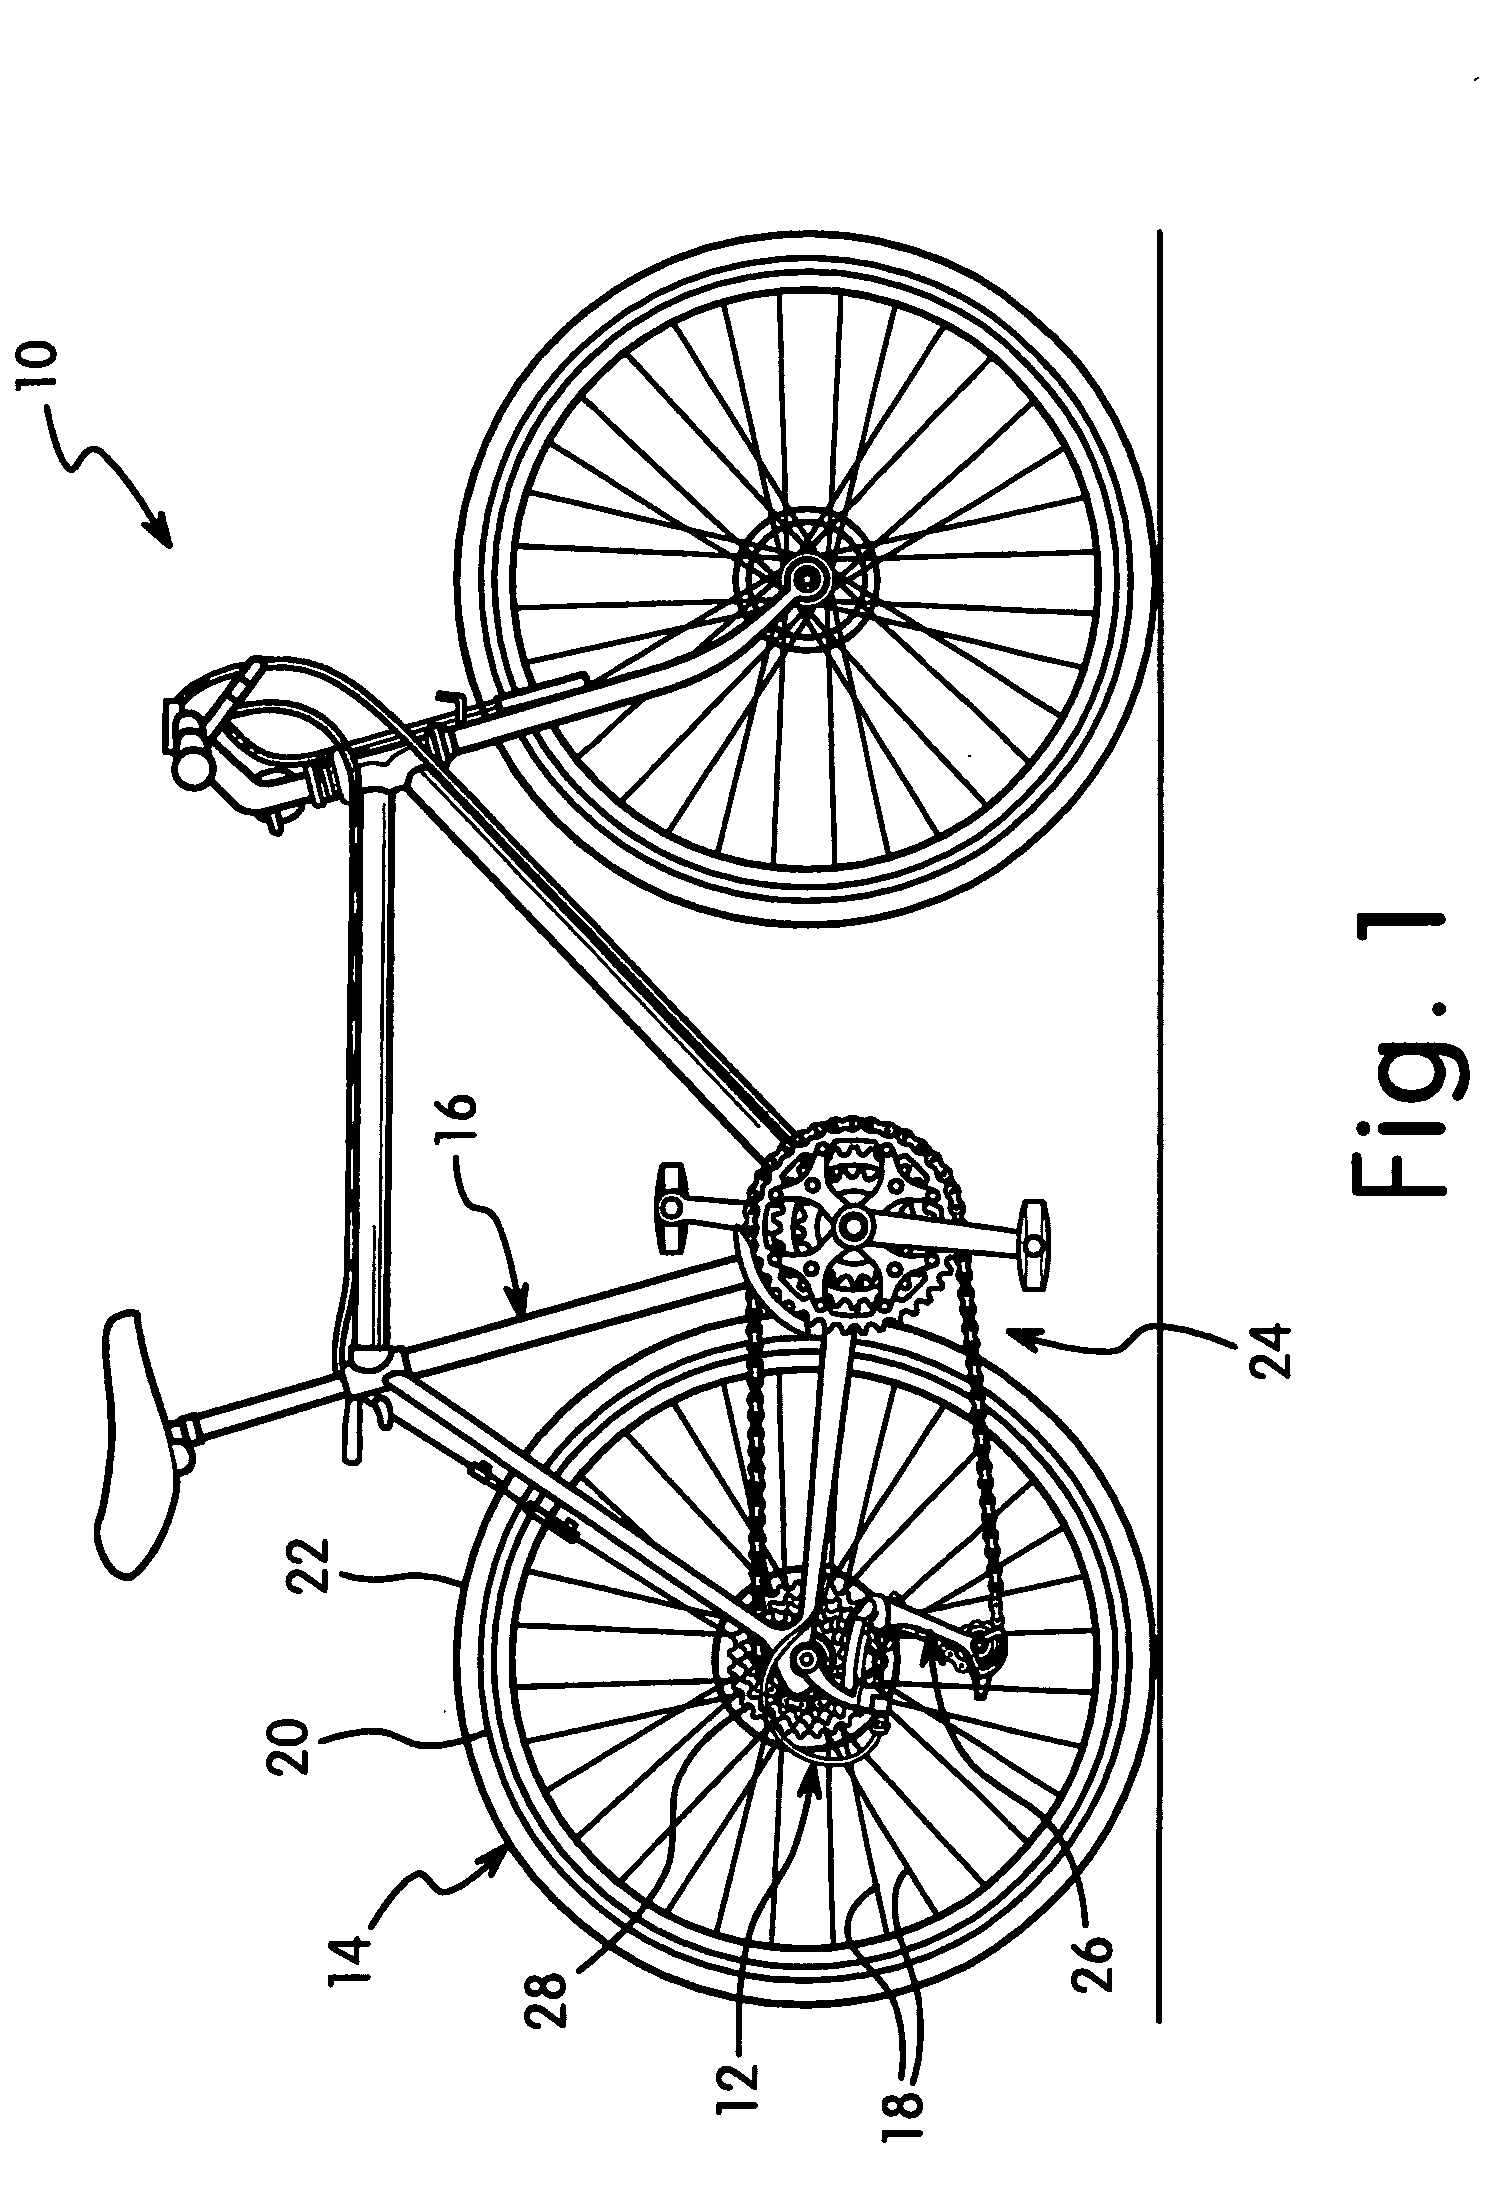 Bicycle hub sealing assembly